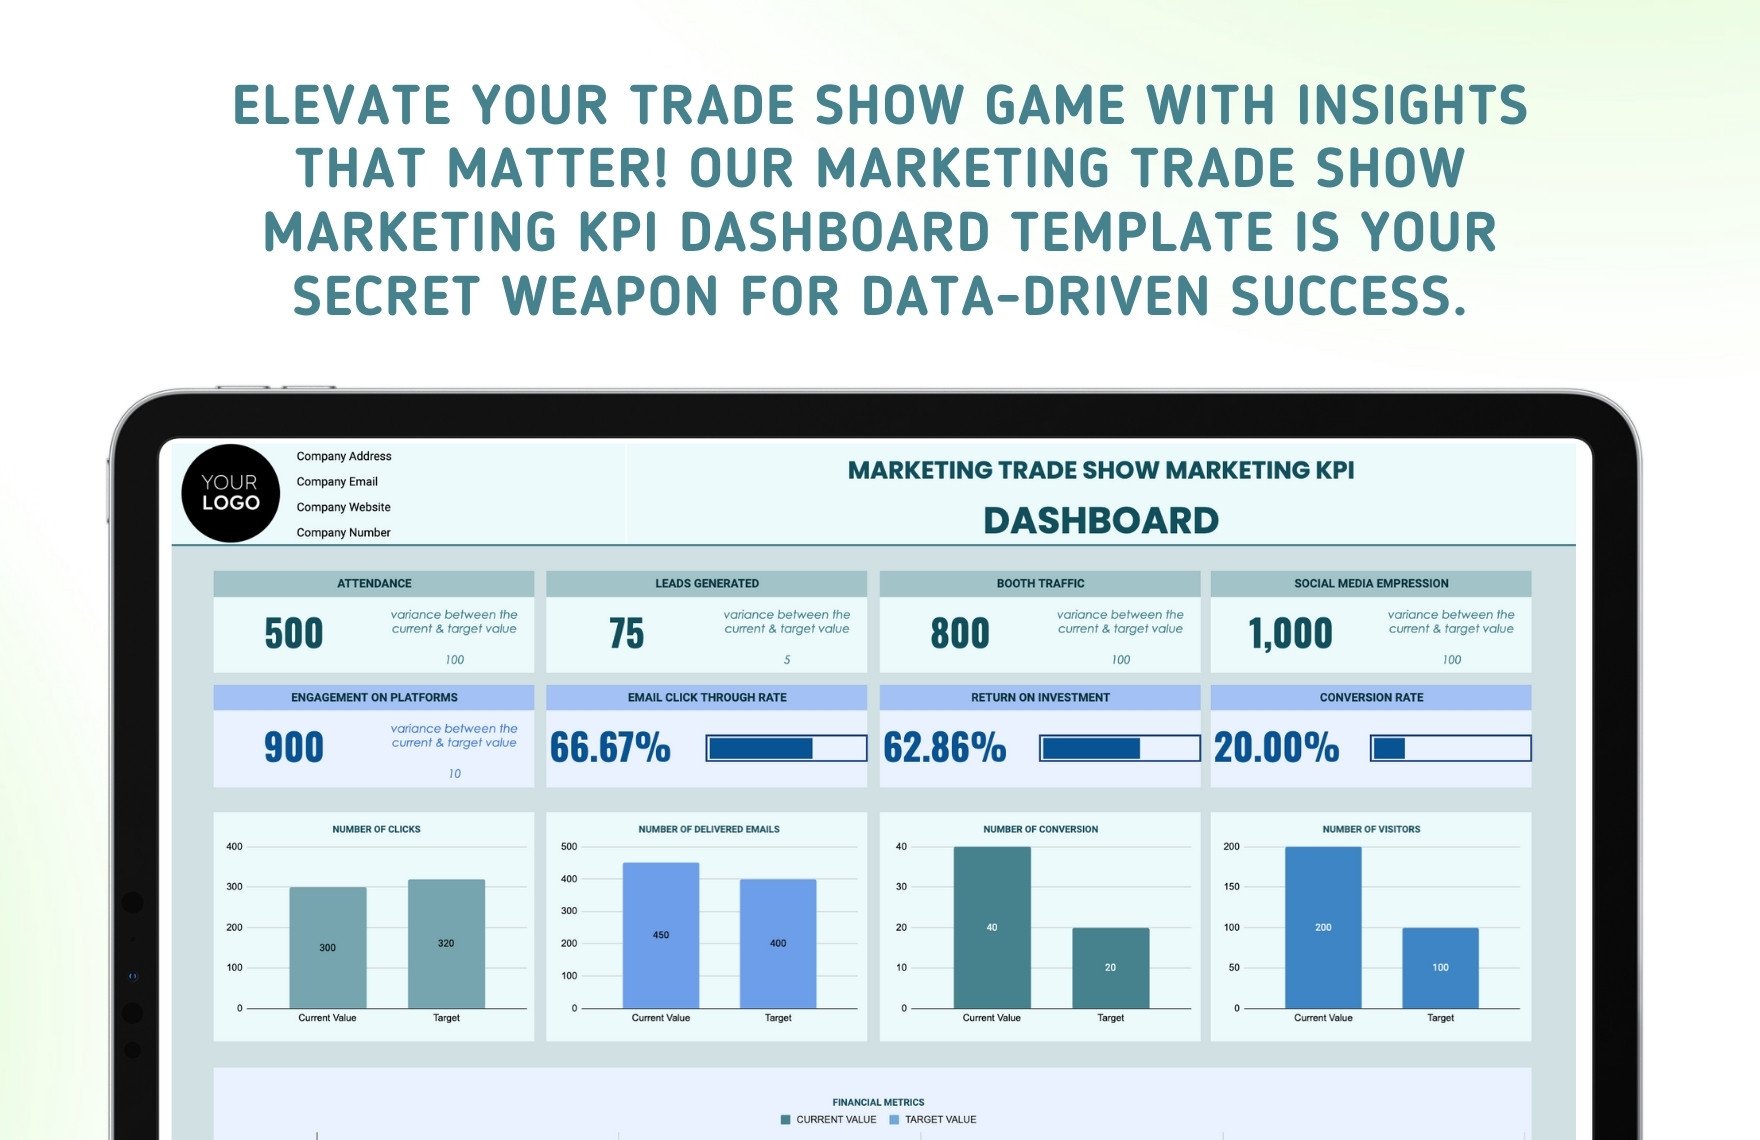 Marketing Trade Show Marketing KPI Dashboard Template